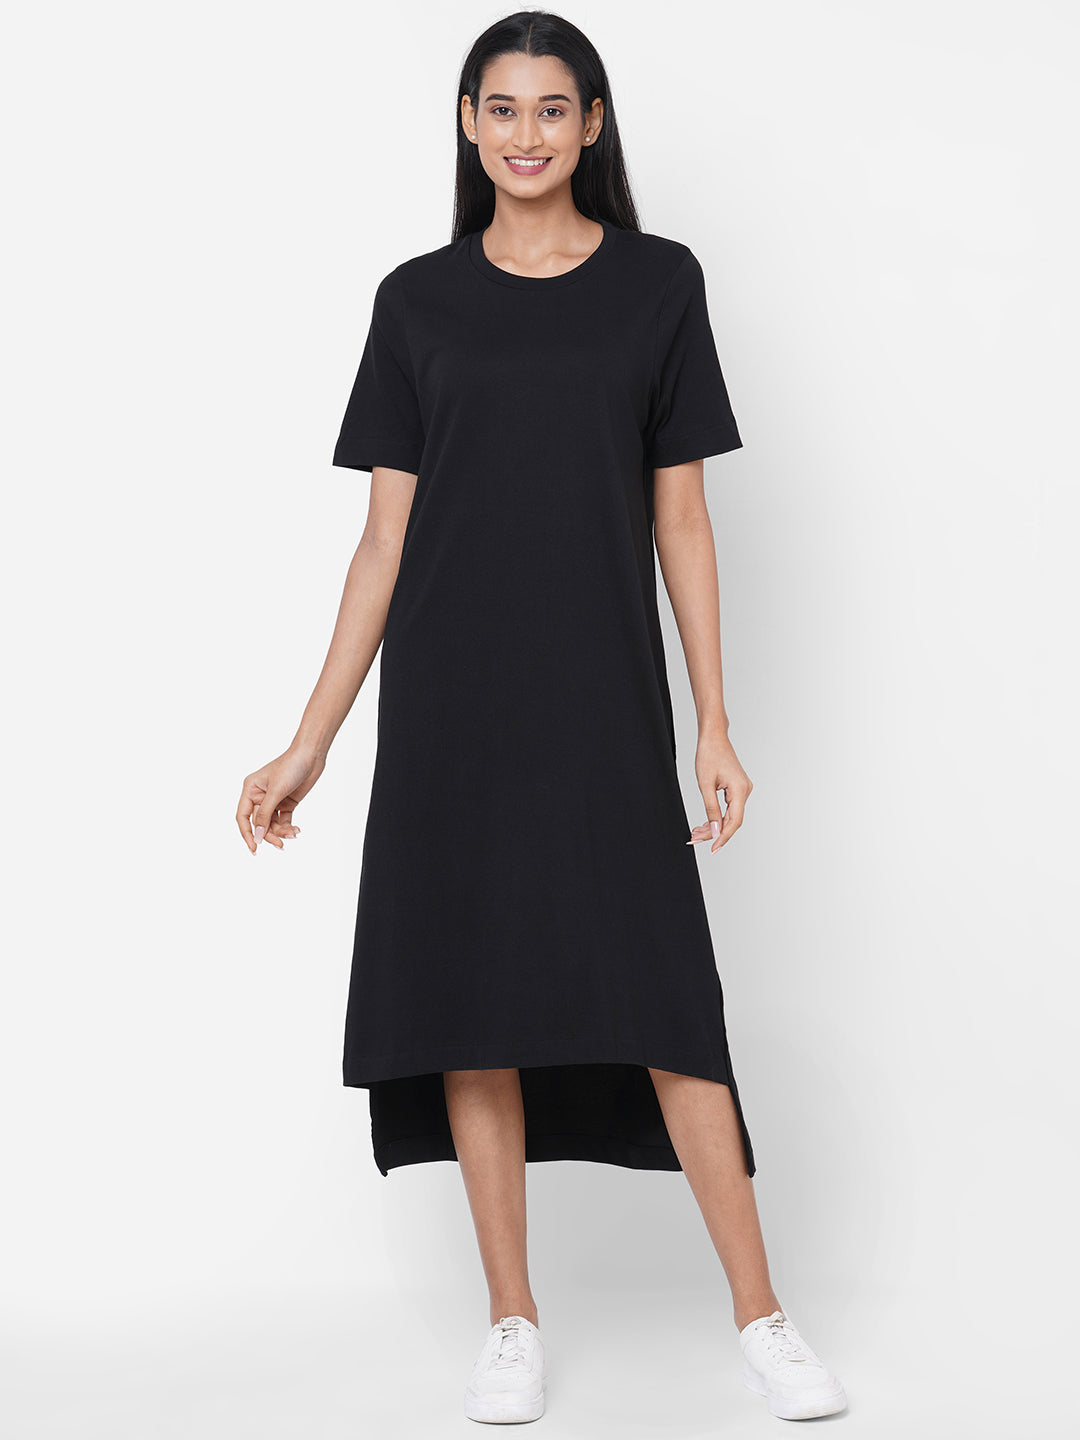 Women's Black Cotton Regular Fit Knit Dress